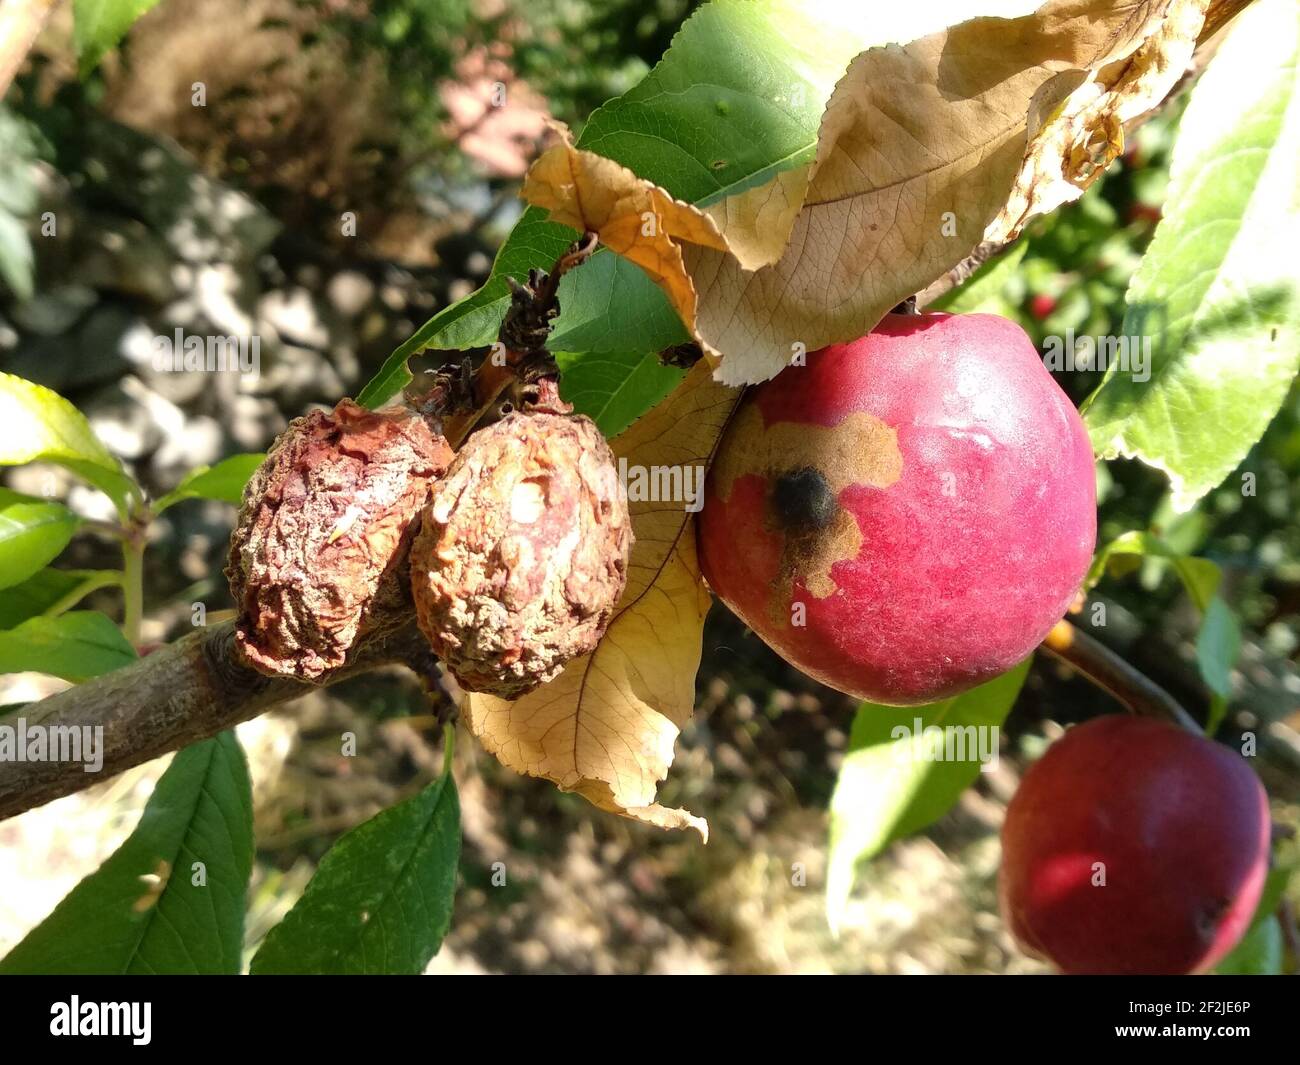 Rotten fruits on the tree Stock Photo